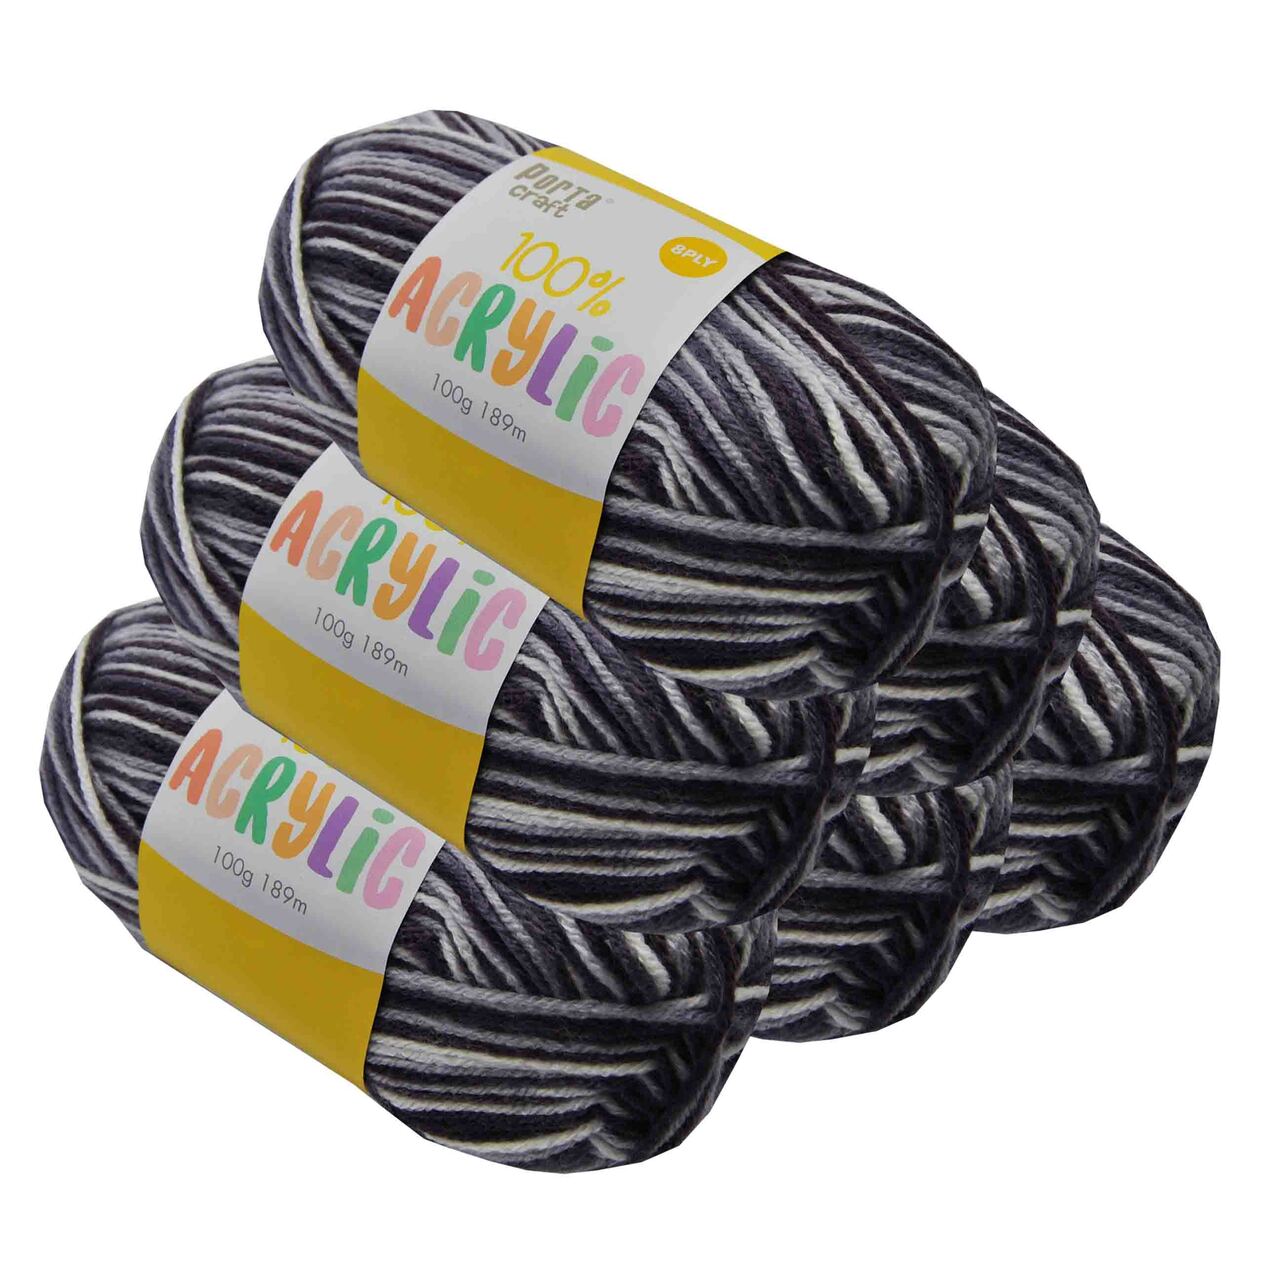 Acrylic Yarn 100g 189m 8ply - Variegated Charcoal